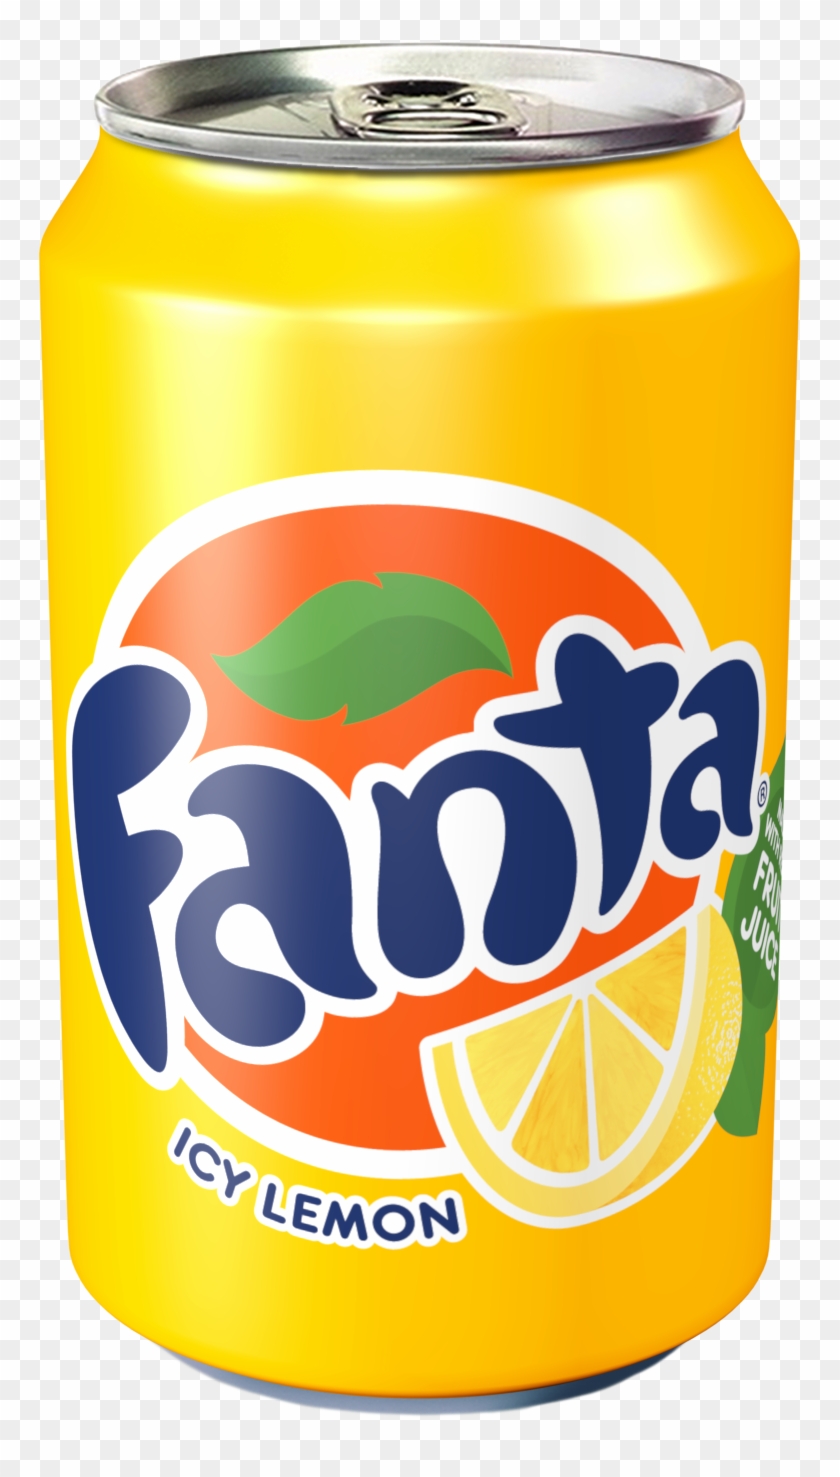 Vueqc Fanta Icy Lemon 330ml Can - Fanta Lemon Can Png Clipart #584060